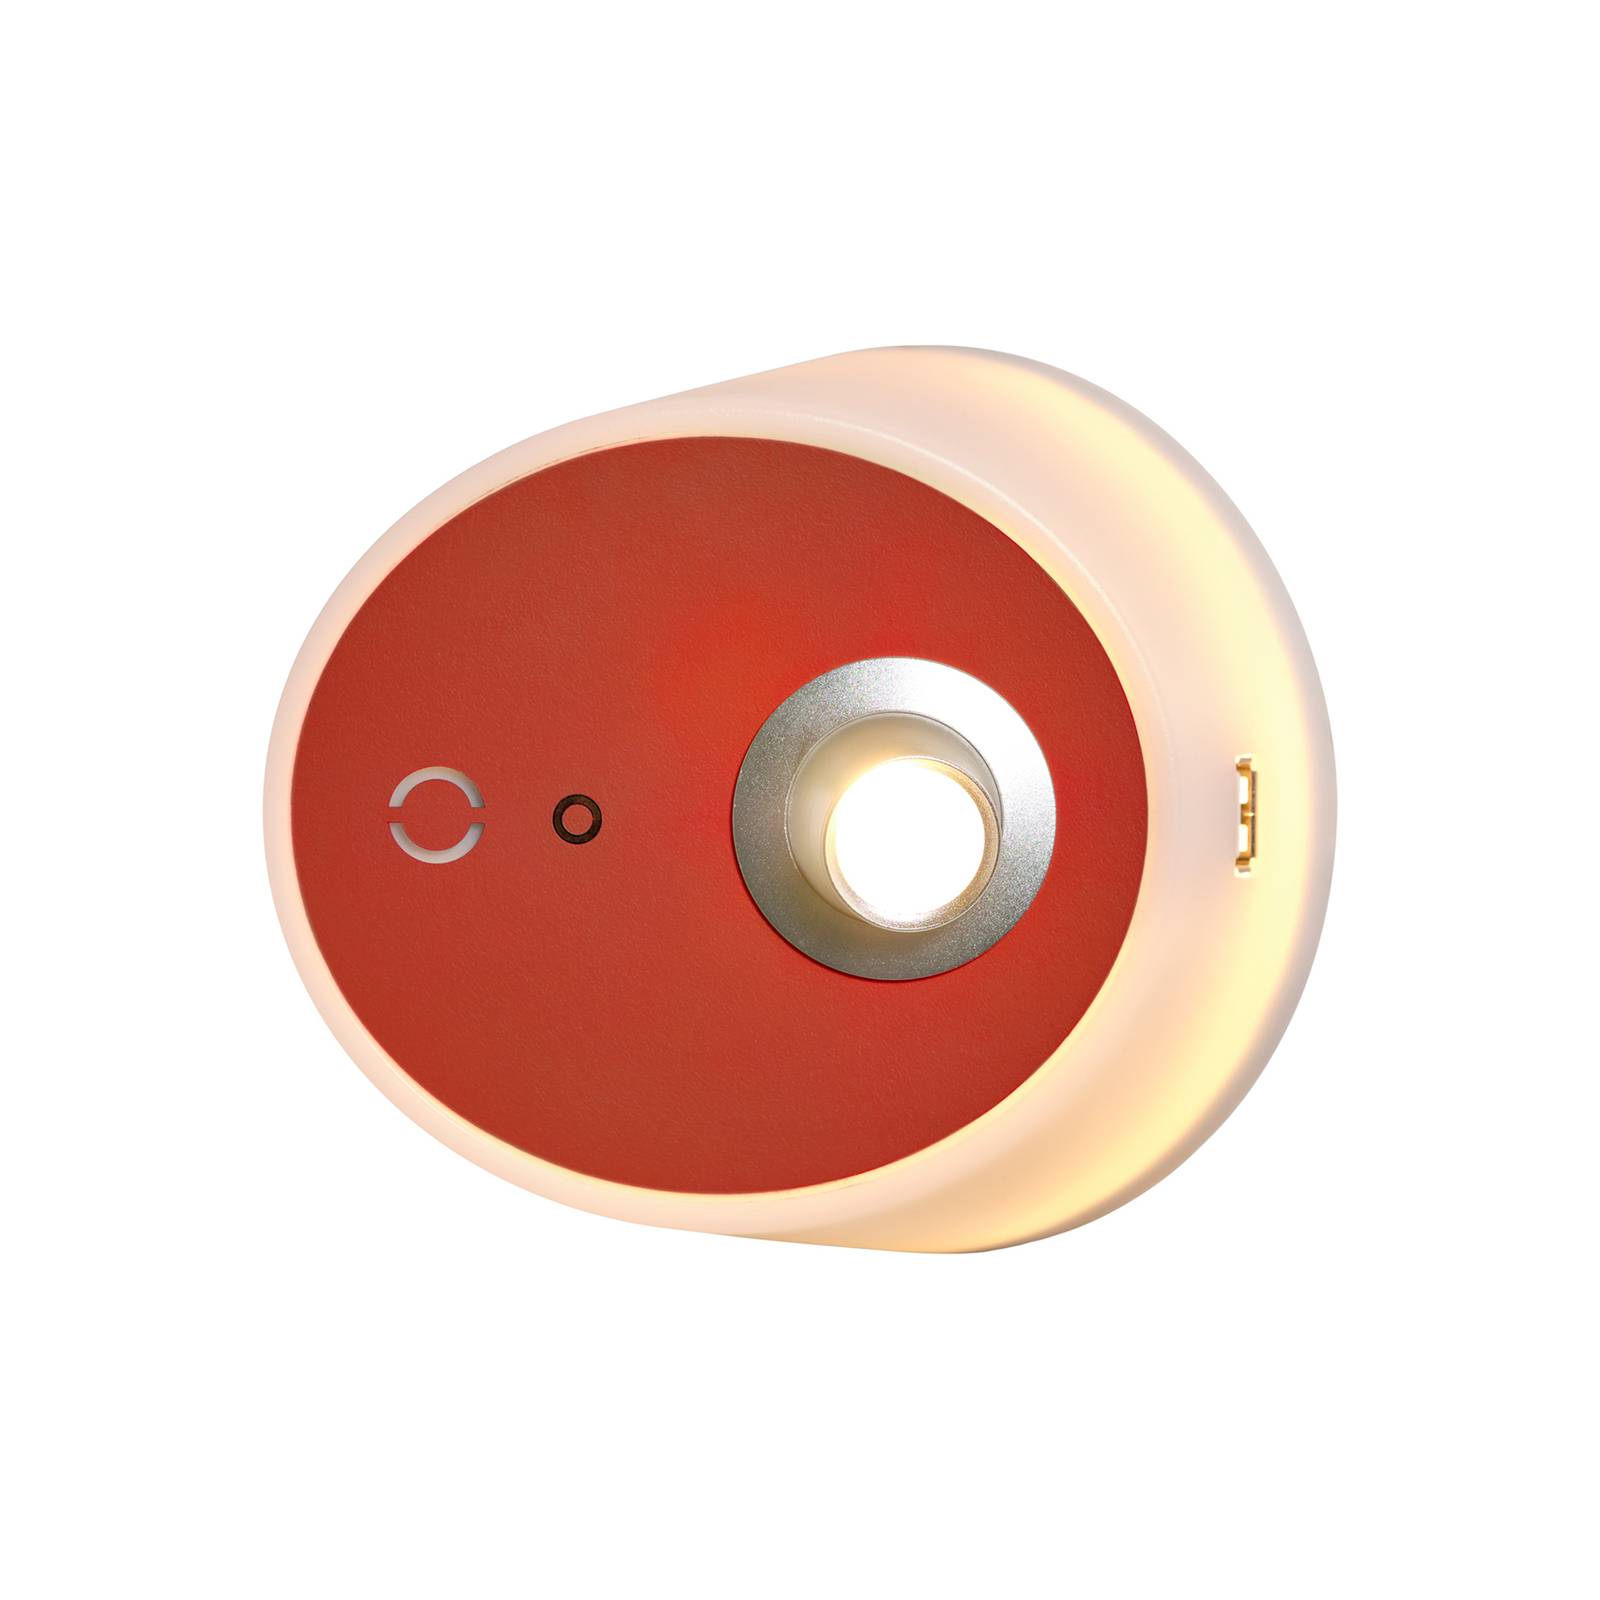 LED-Wandlampe Zoom, Spot, USB-Ausgang, terracotta von Carpyen